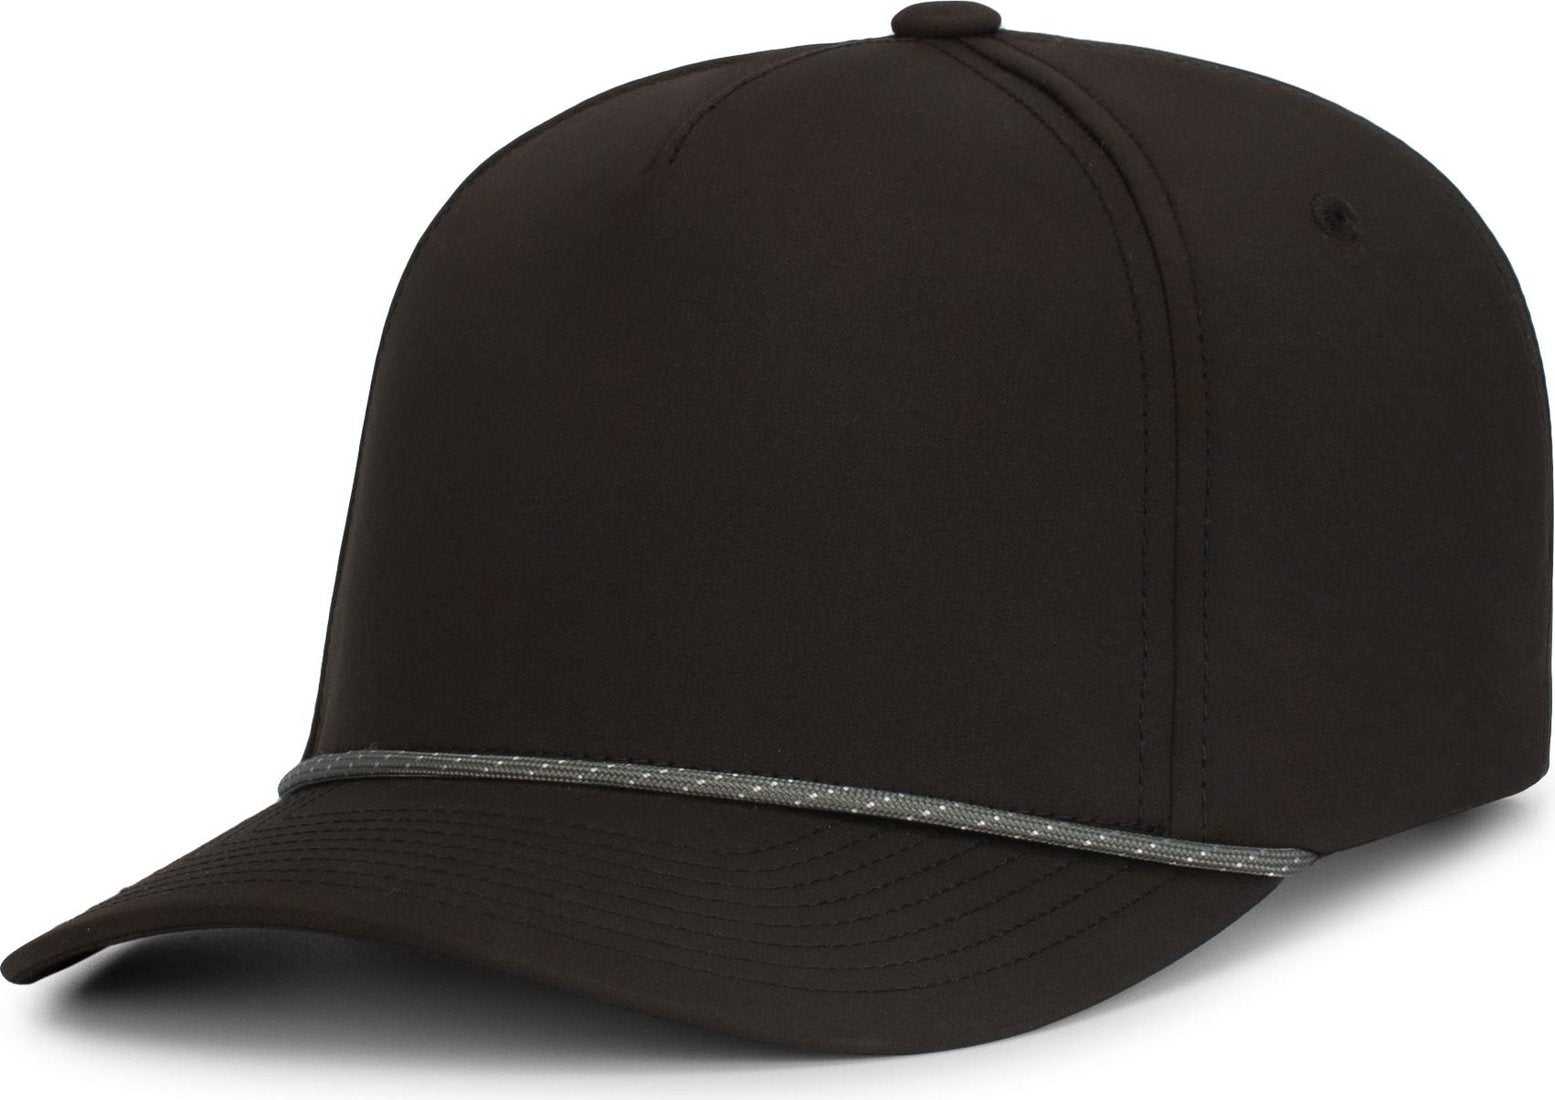 Pacific Headwear P421 Weekender Cap - Black Graphite White